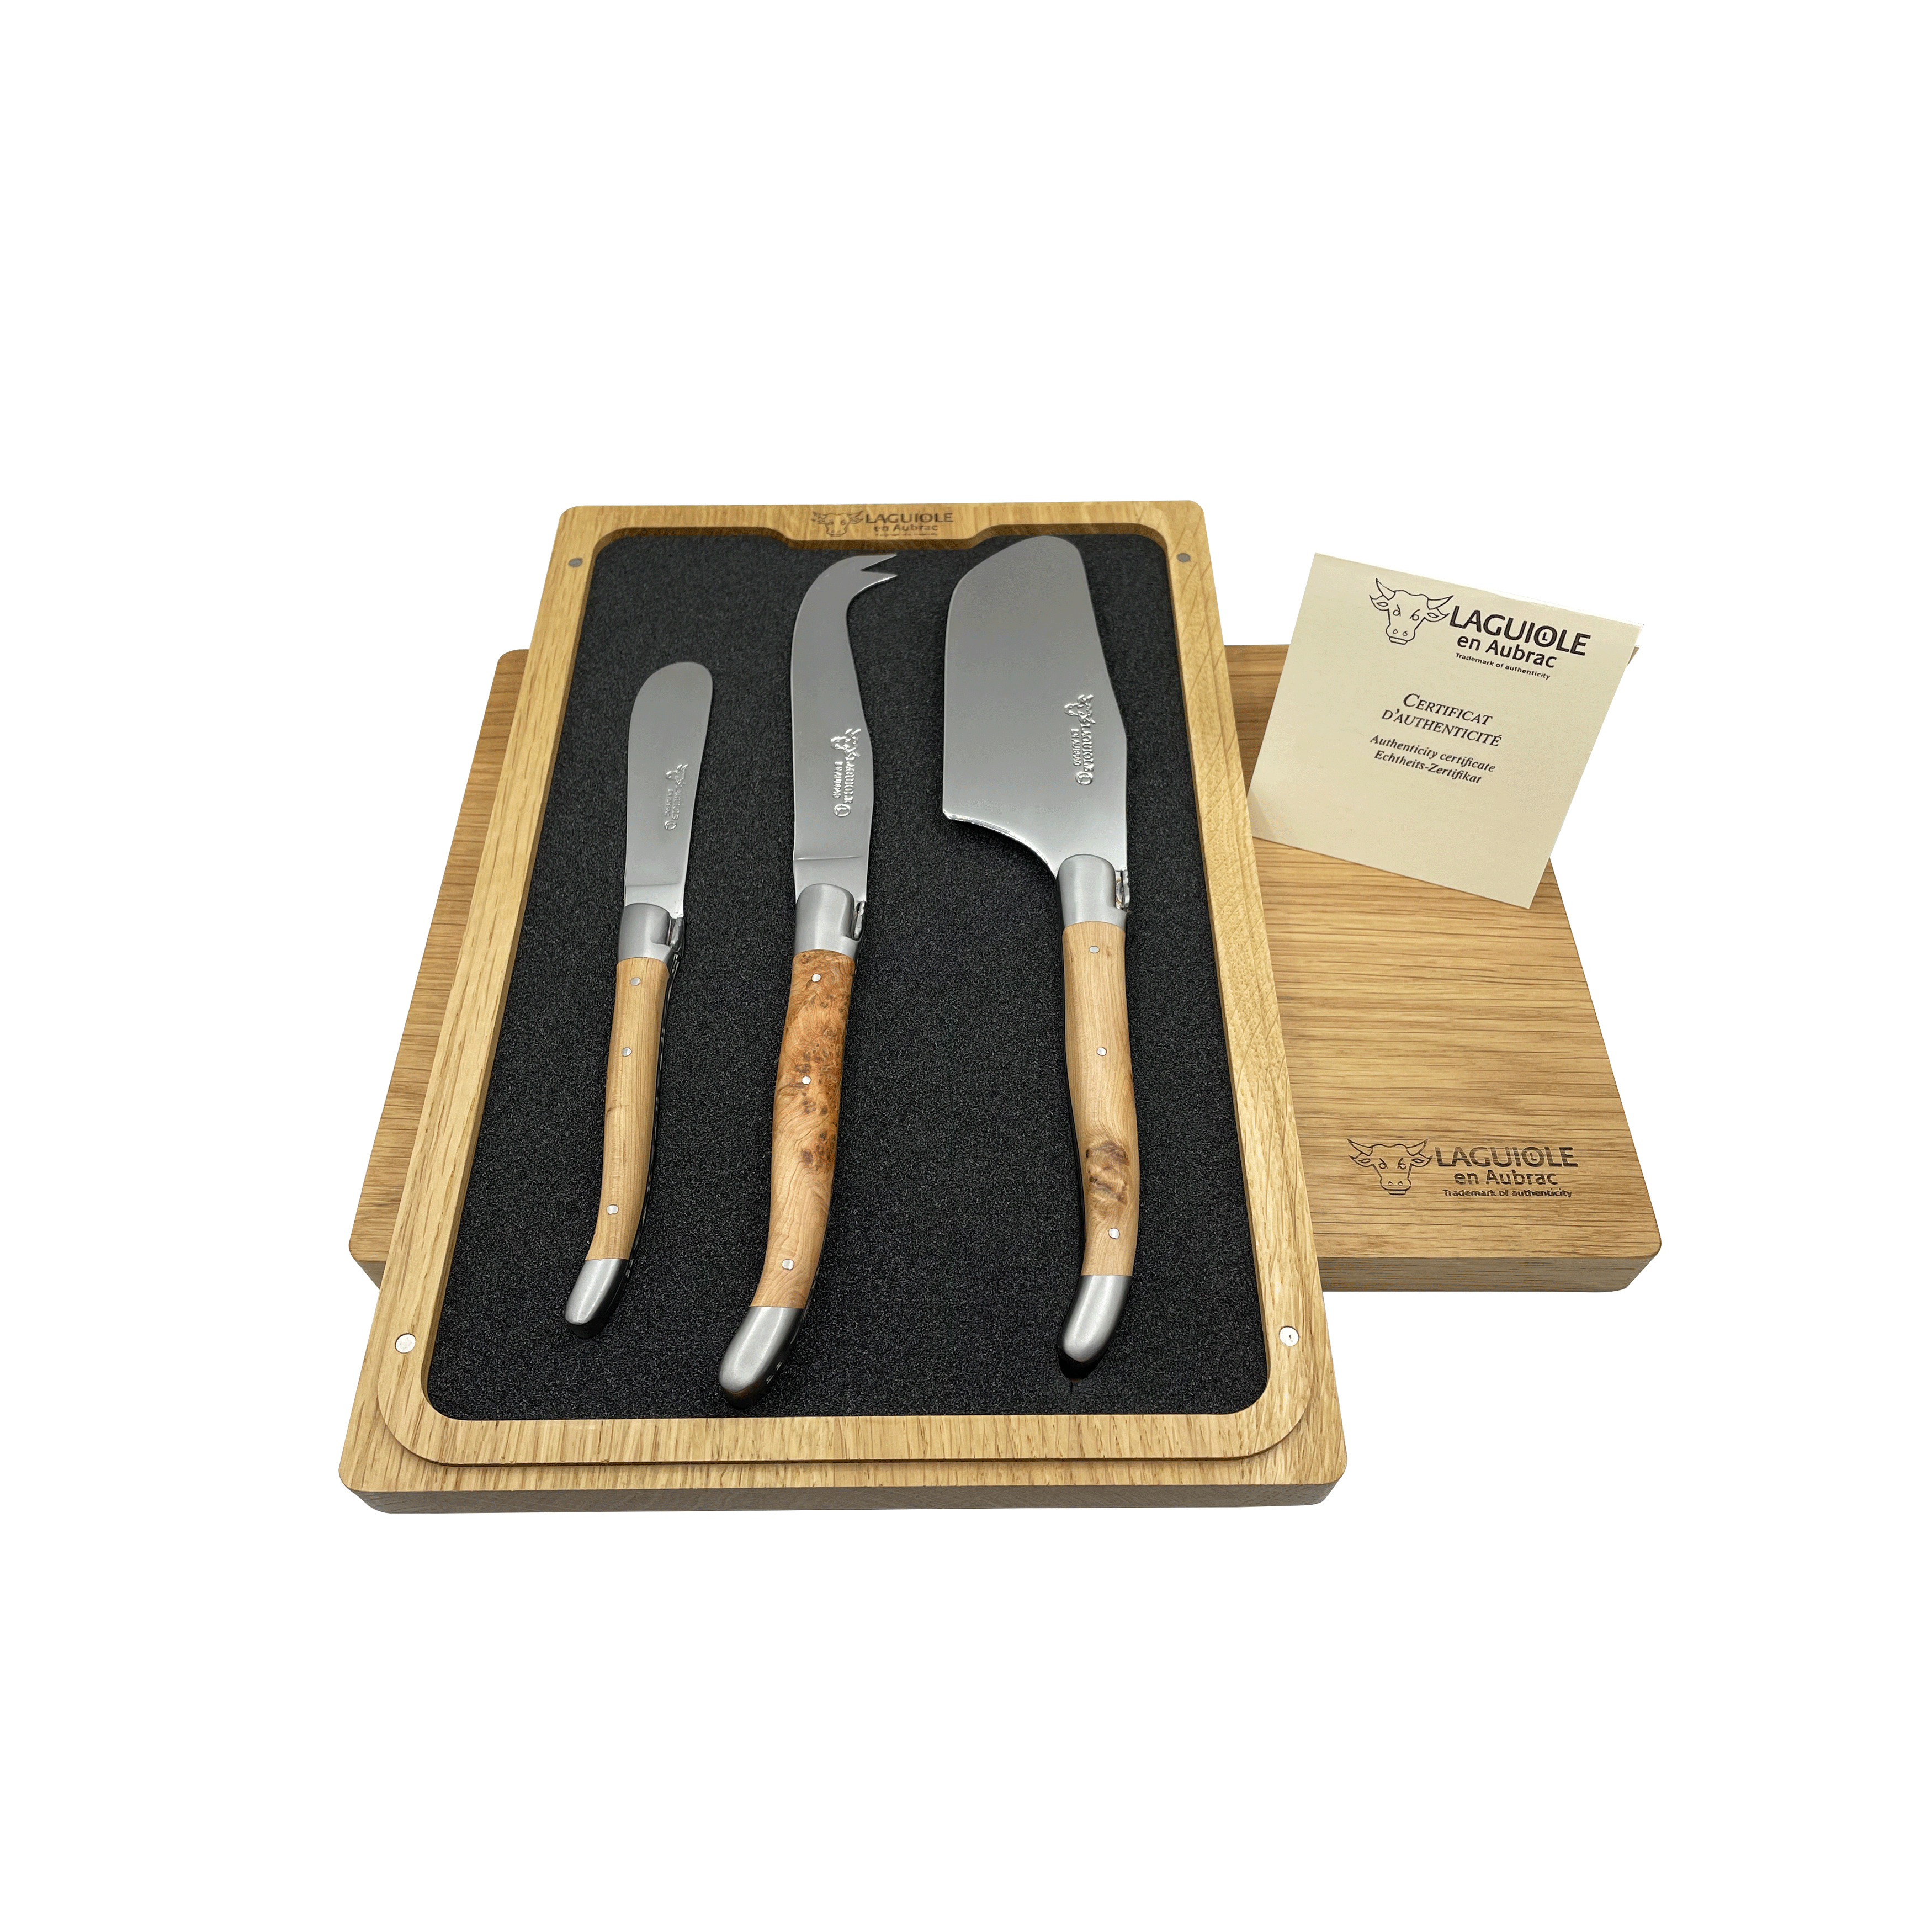 Design Ideas Abalon Cheese Knives, Set of 3 - Silver